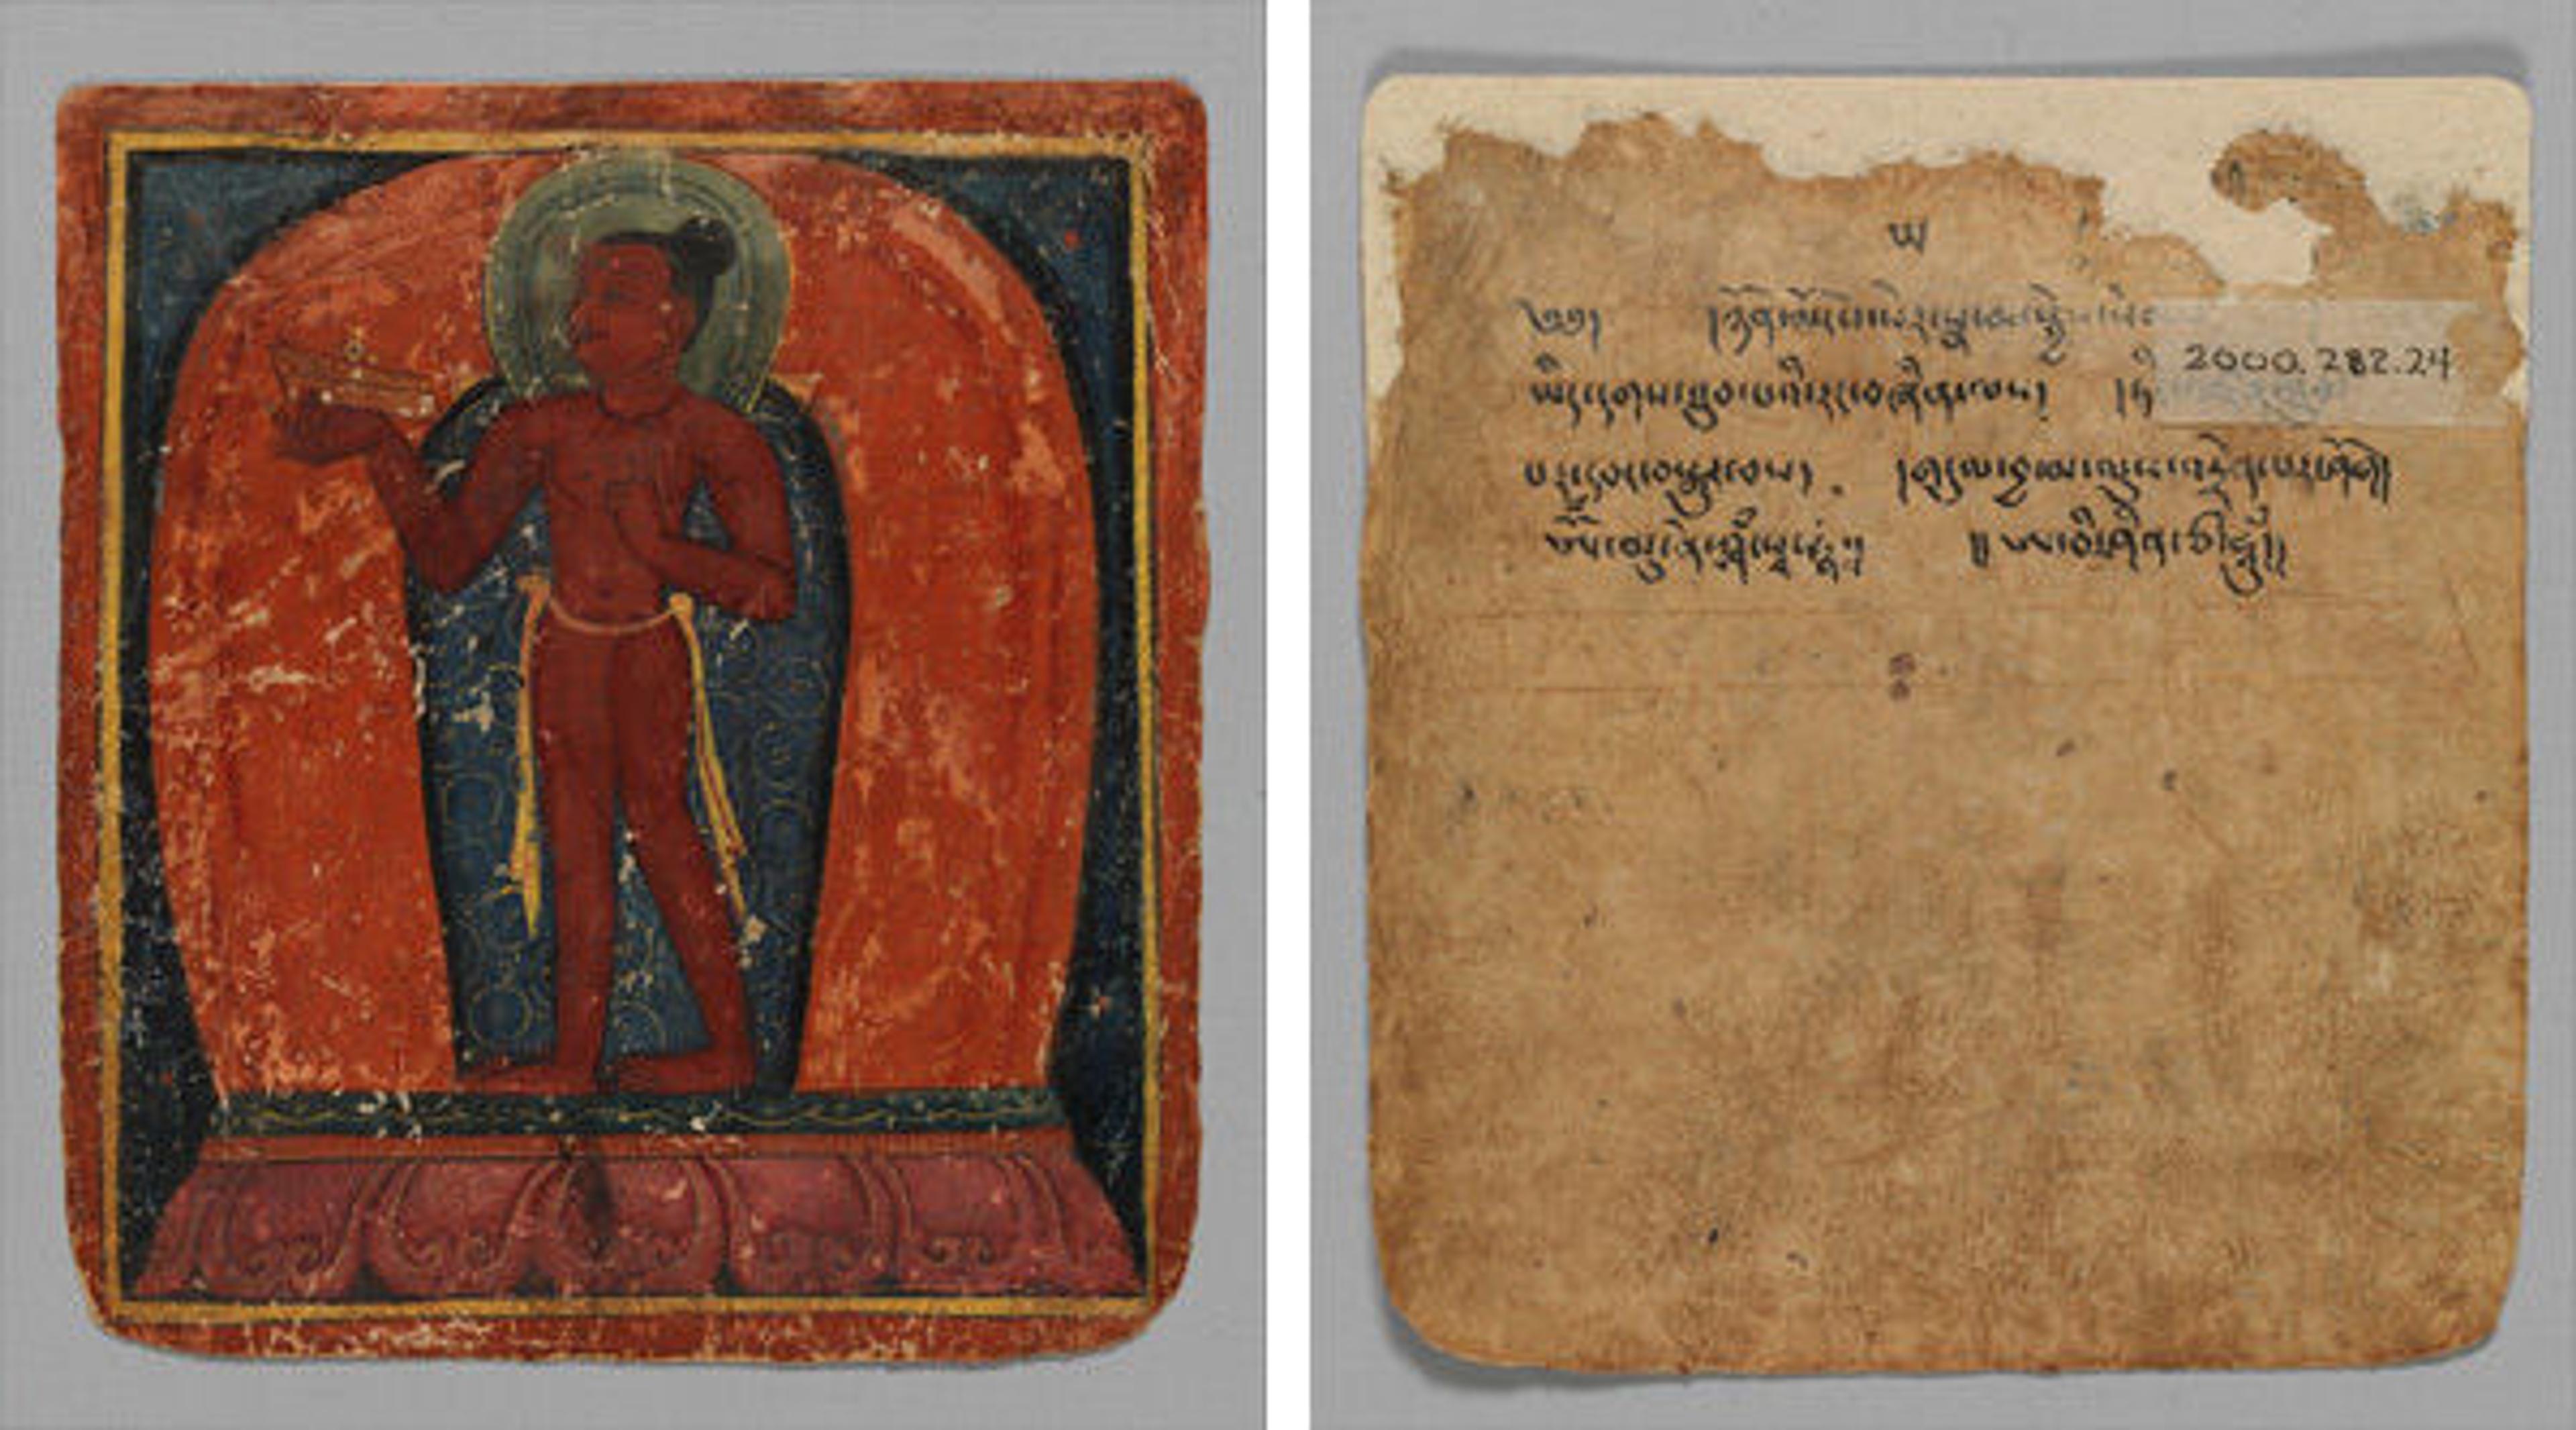 Initiation Card (Tsakalis), early 15th century. Tibet. 2000.282.24